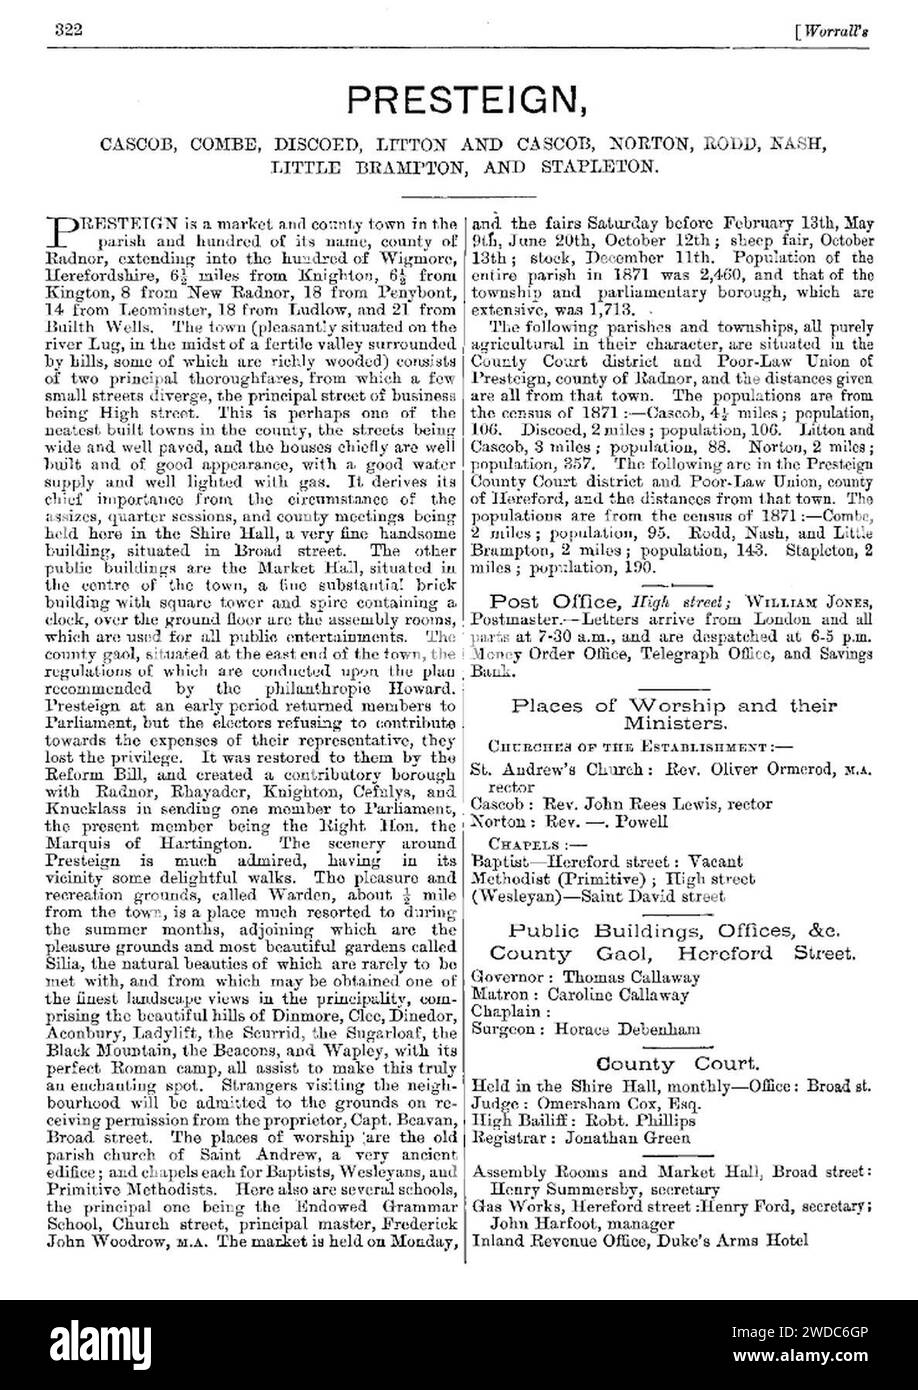 Rodd, Nash et Little Brampton dans Worralll's Directory of South Wales, 1875 p322. Banque D'Images